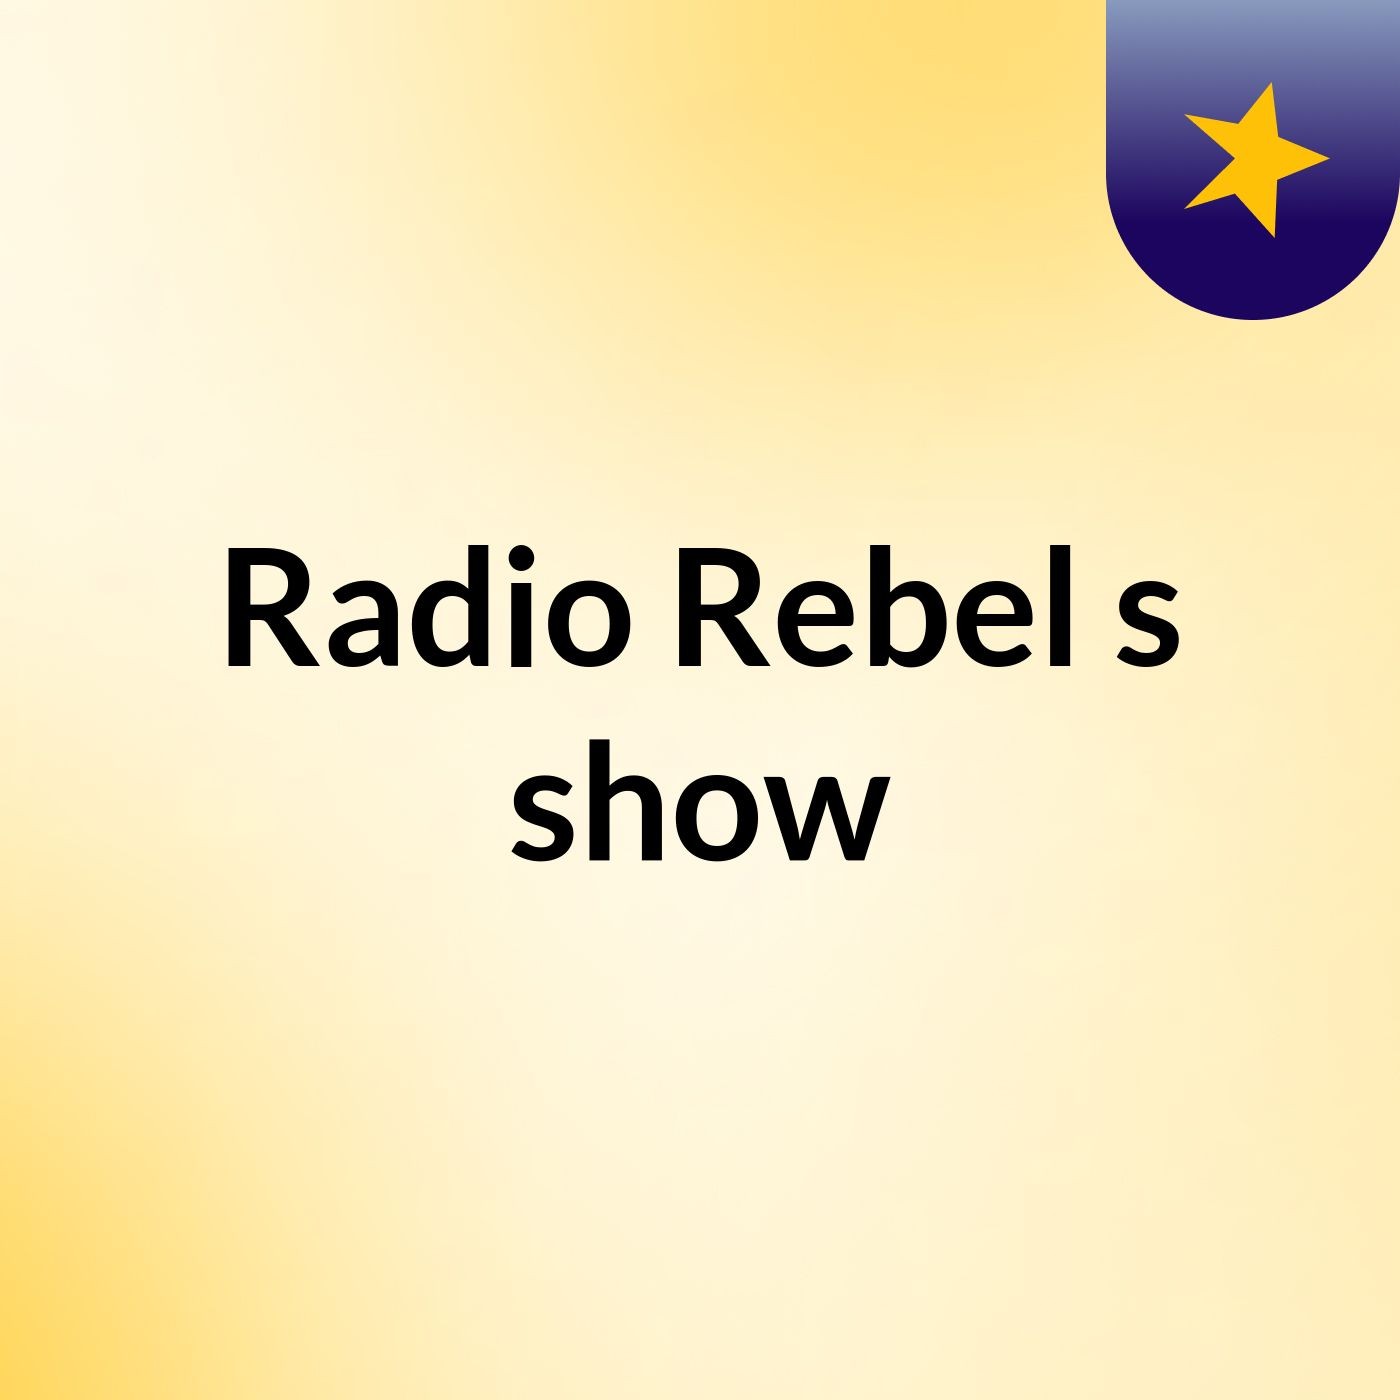 Radio Rebel's show